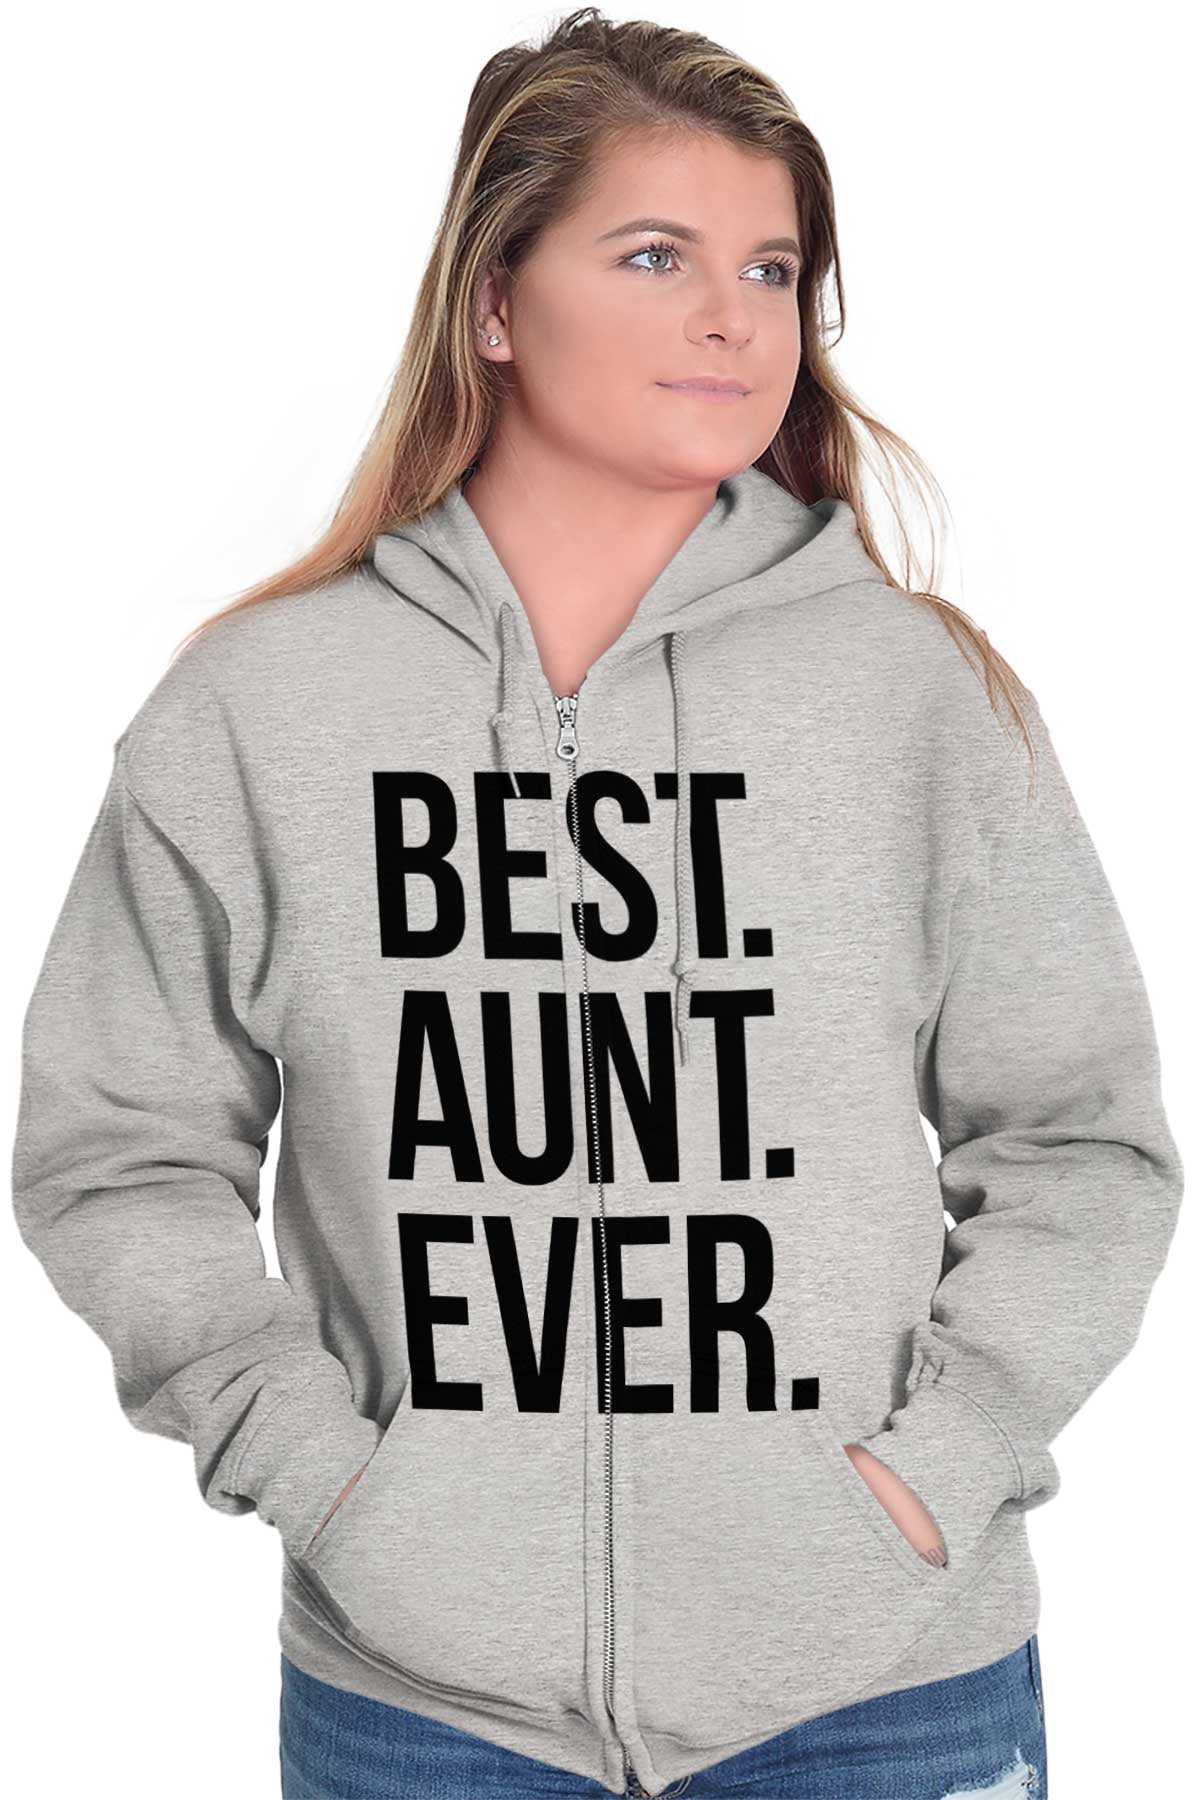 Best Aunt Ever Cute Favorite Auntie Zip Hoodie Sweatshirt Women